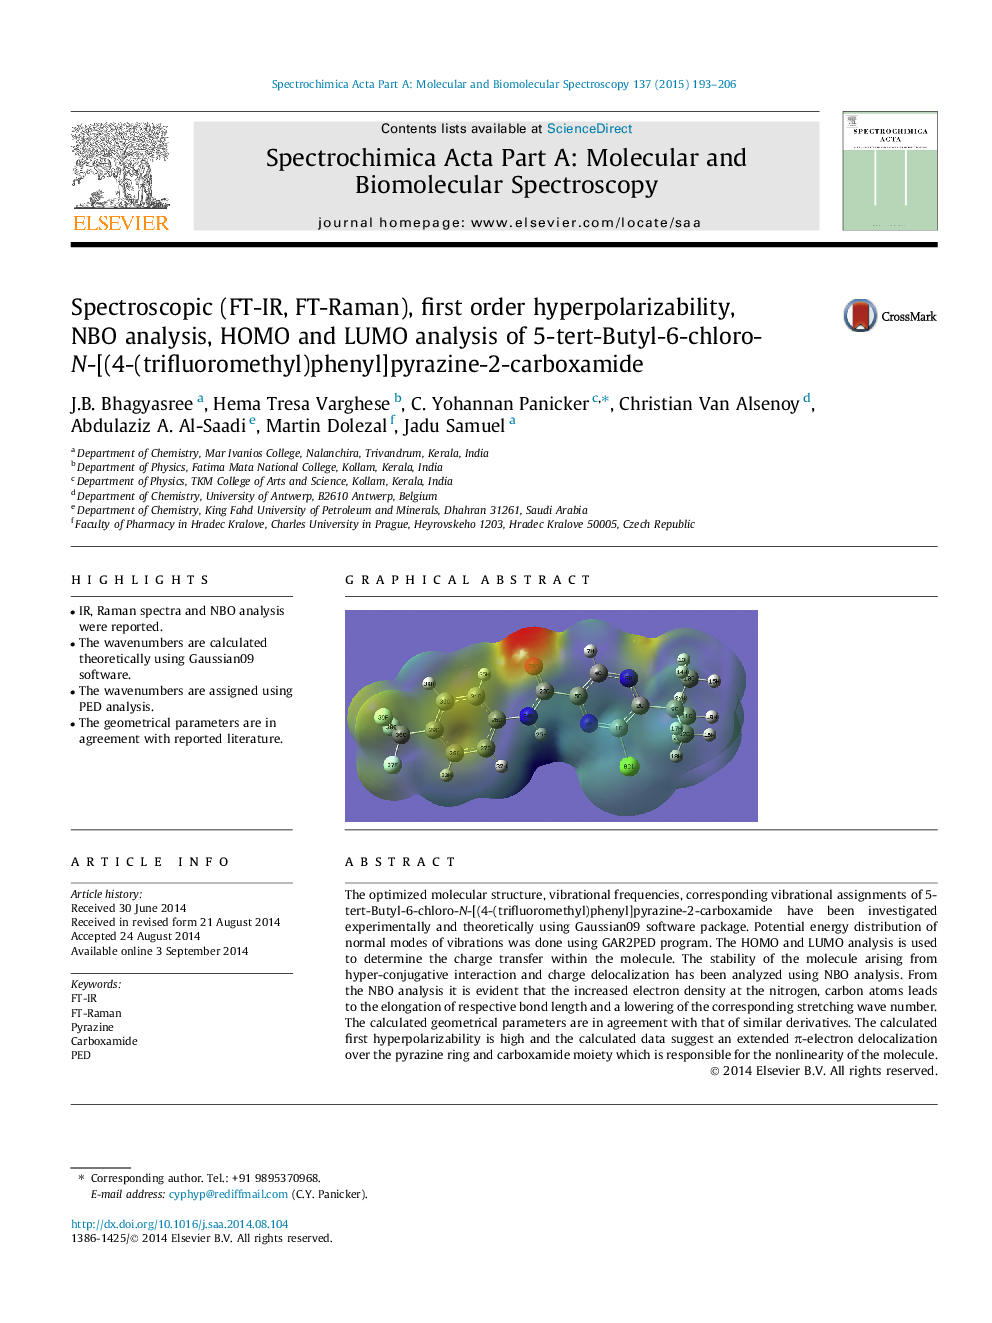 Spectroscopic (FT-IR, FT-Raman), first order hyperpolarizability, NBO analysis, HOMO and LUMO analysis of 5-tert-Butyl-6-chloro-N-[(4-(trifluoromethyl)phenyl]pyrazine-2-carboxamide